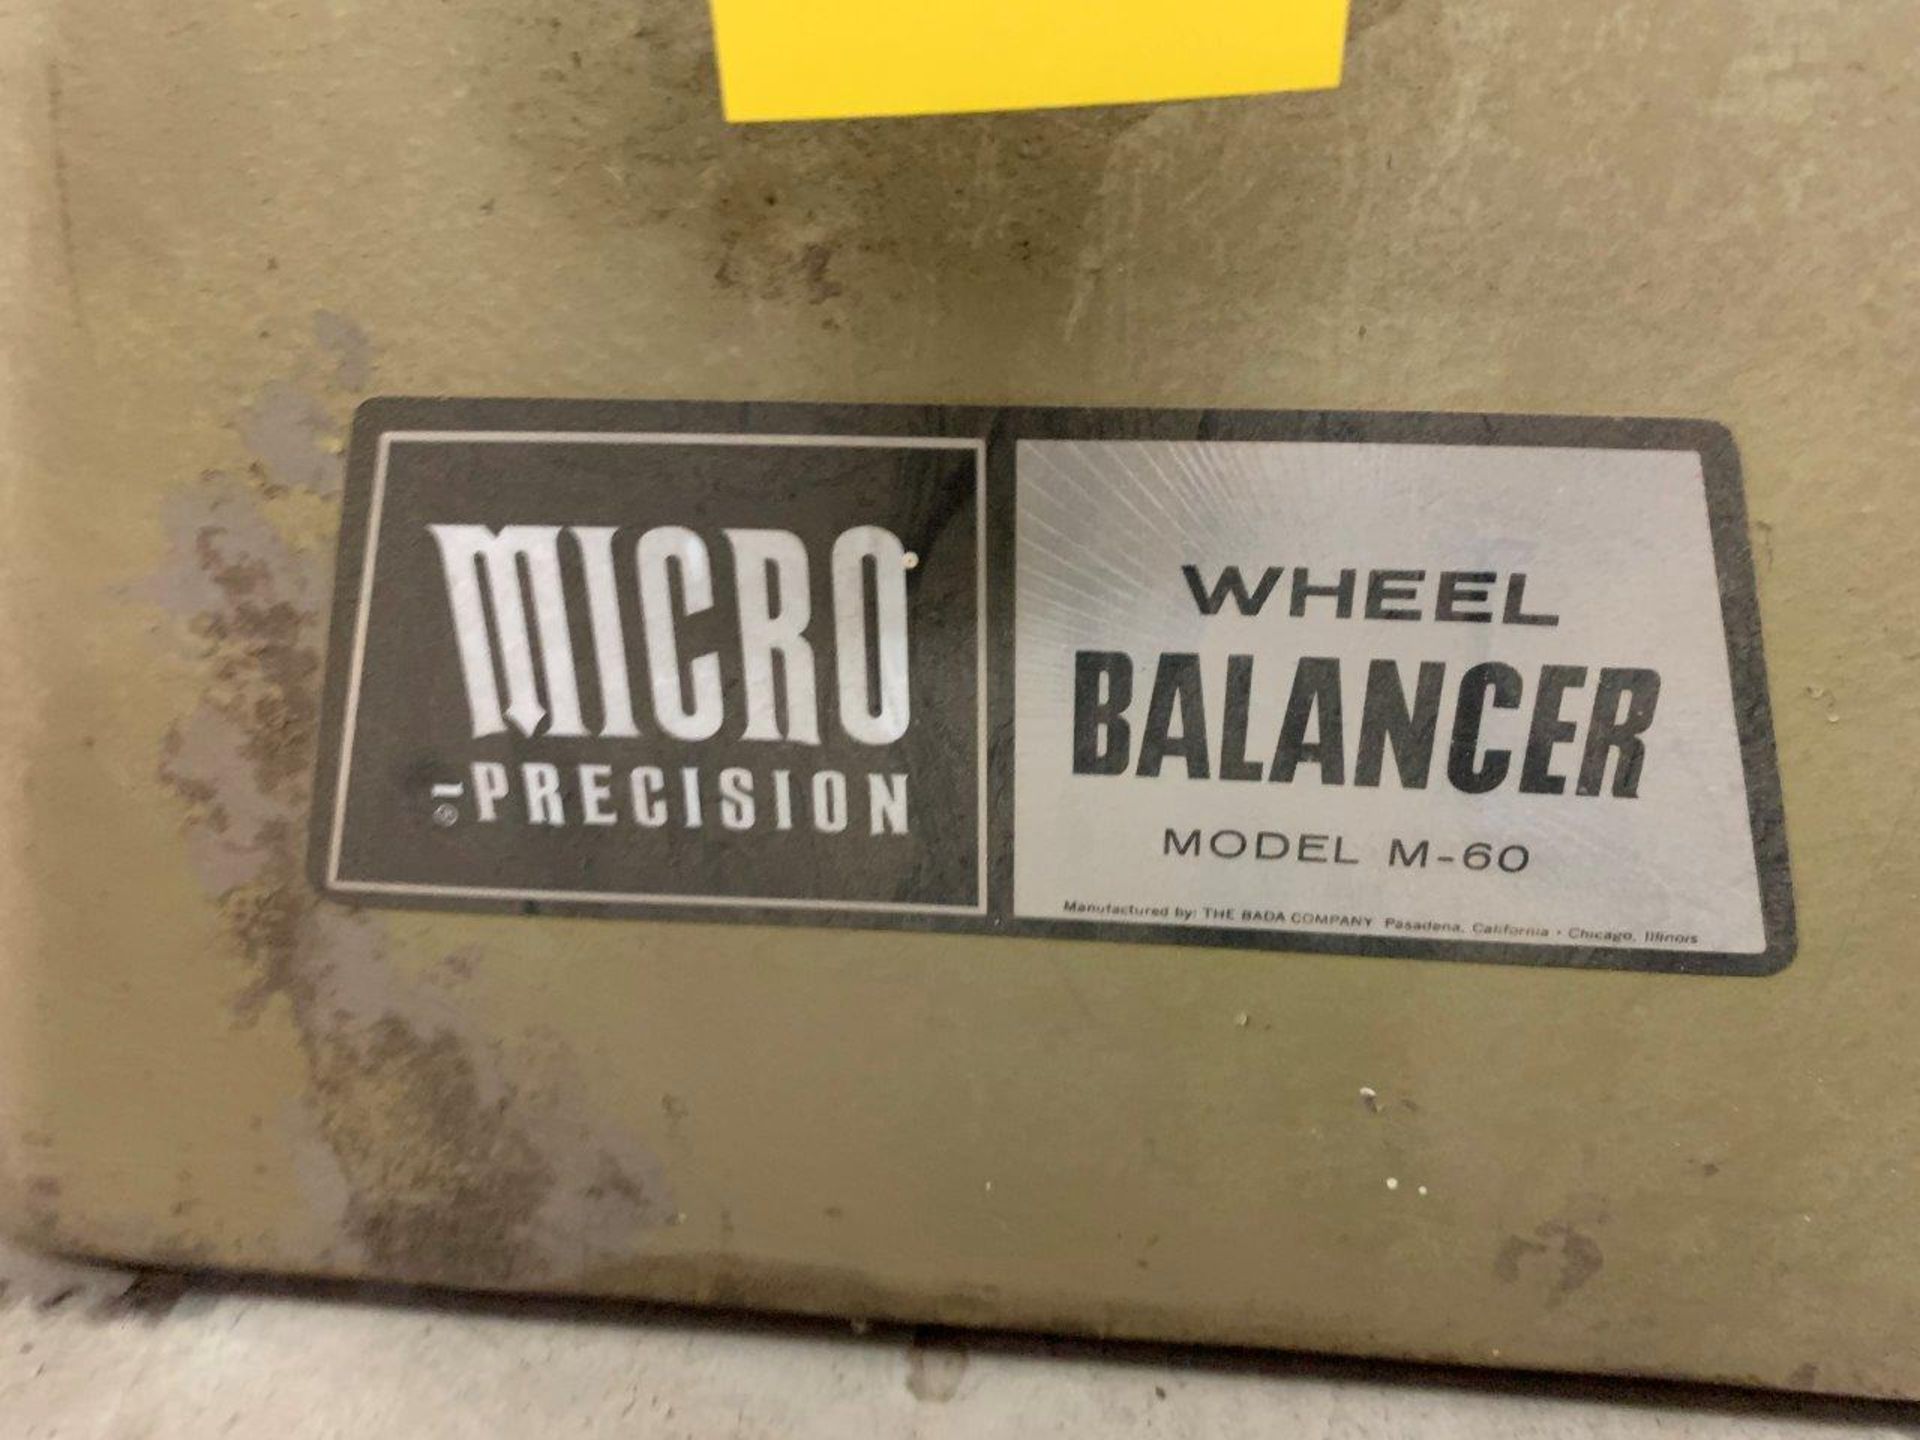 MICRO PRECISION M-60 WHEEL BALANCER - Image 3 of 4